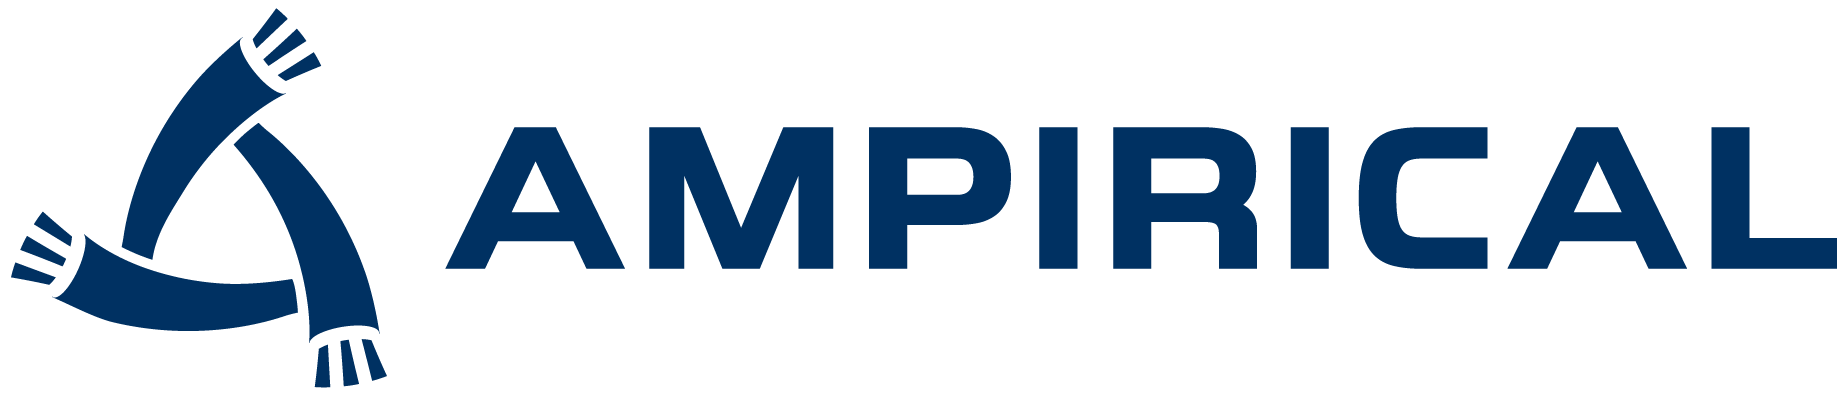 Ampirical Solutions, LLC logo